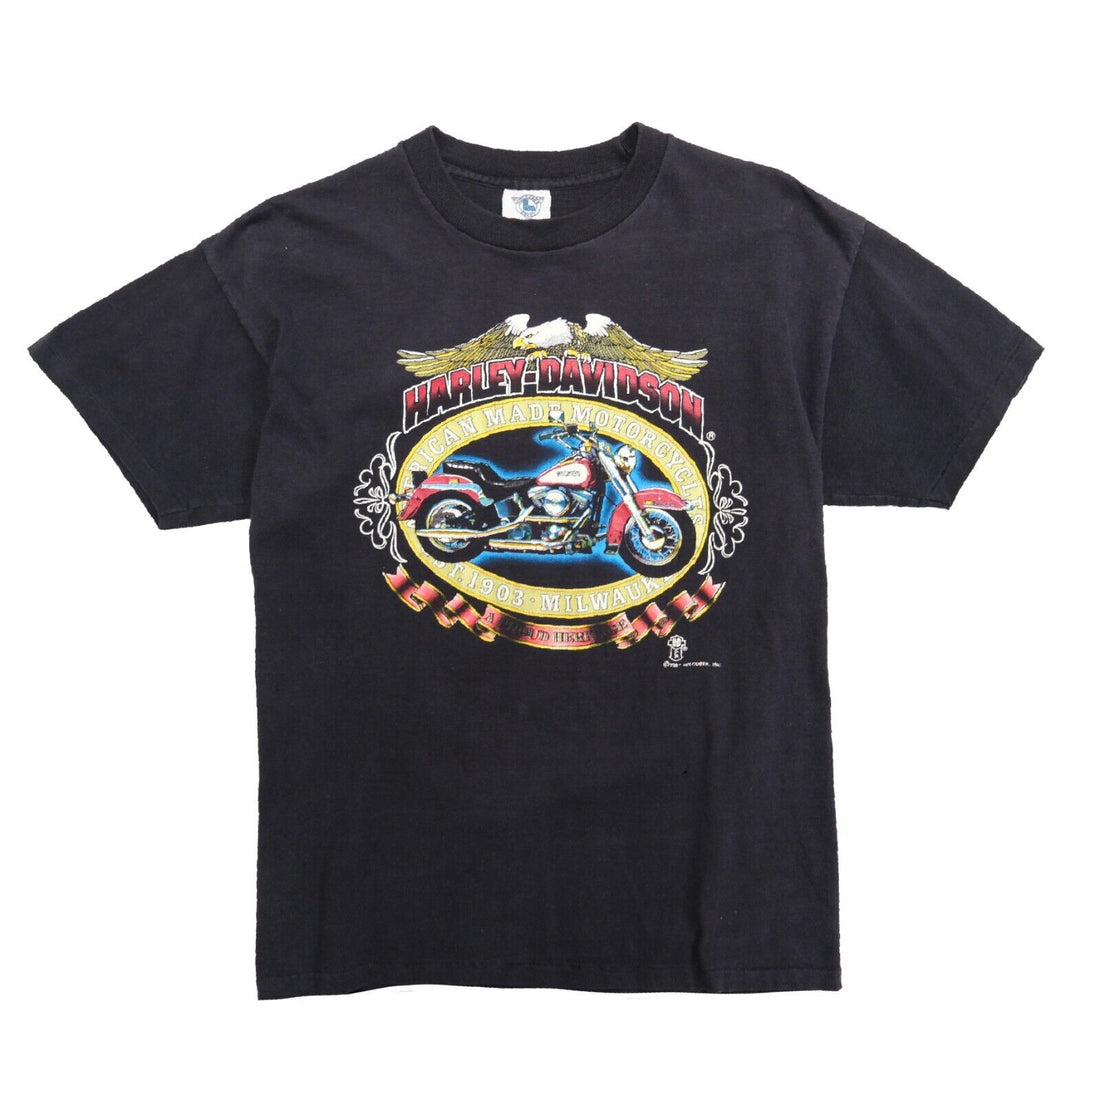 Vintage Harley Davidson Motorcycle A Proud Heritage T-Shirt Size Large 1987 80s